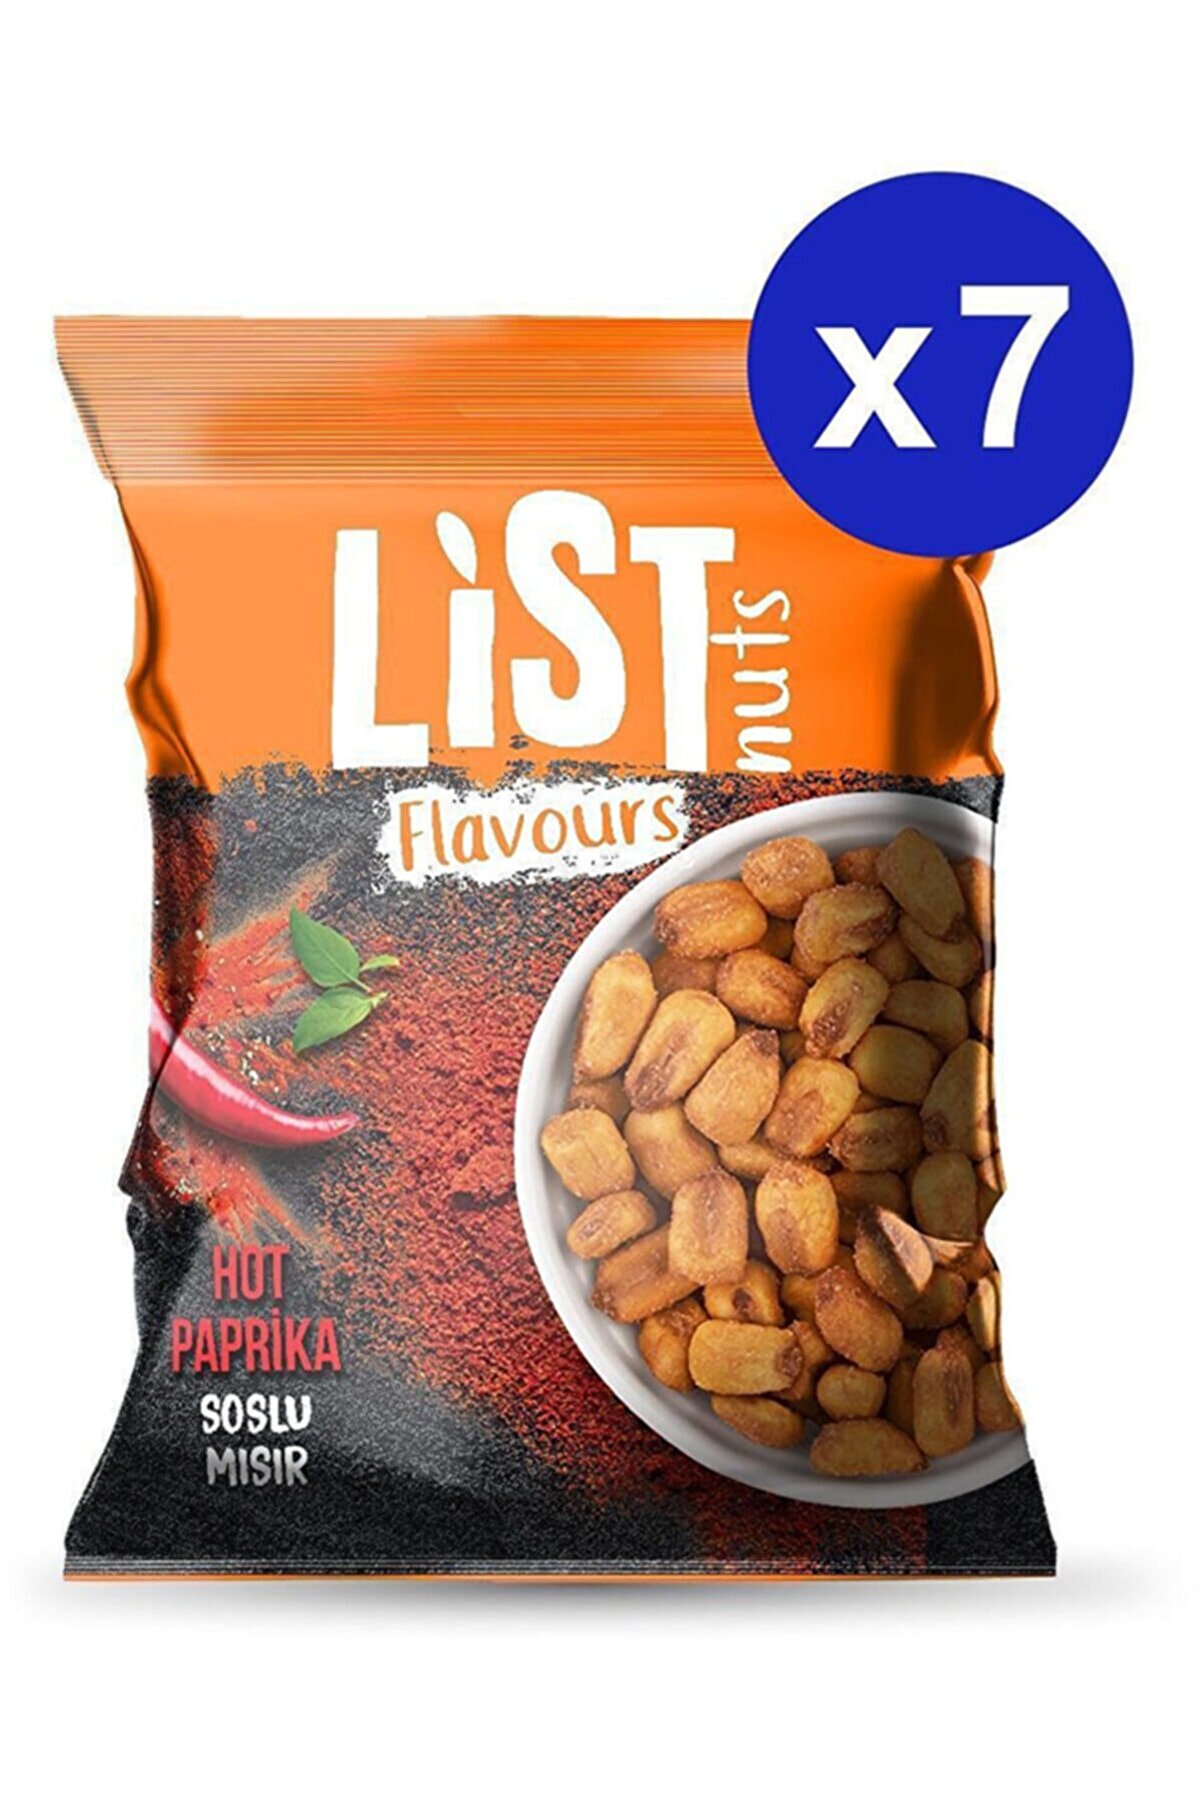 List Flavours Hot Paprika Soslu Mısır 7 X 75 G